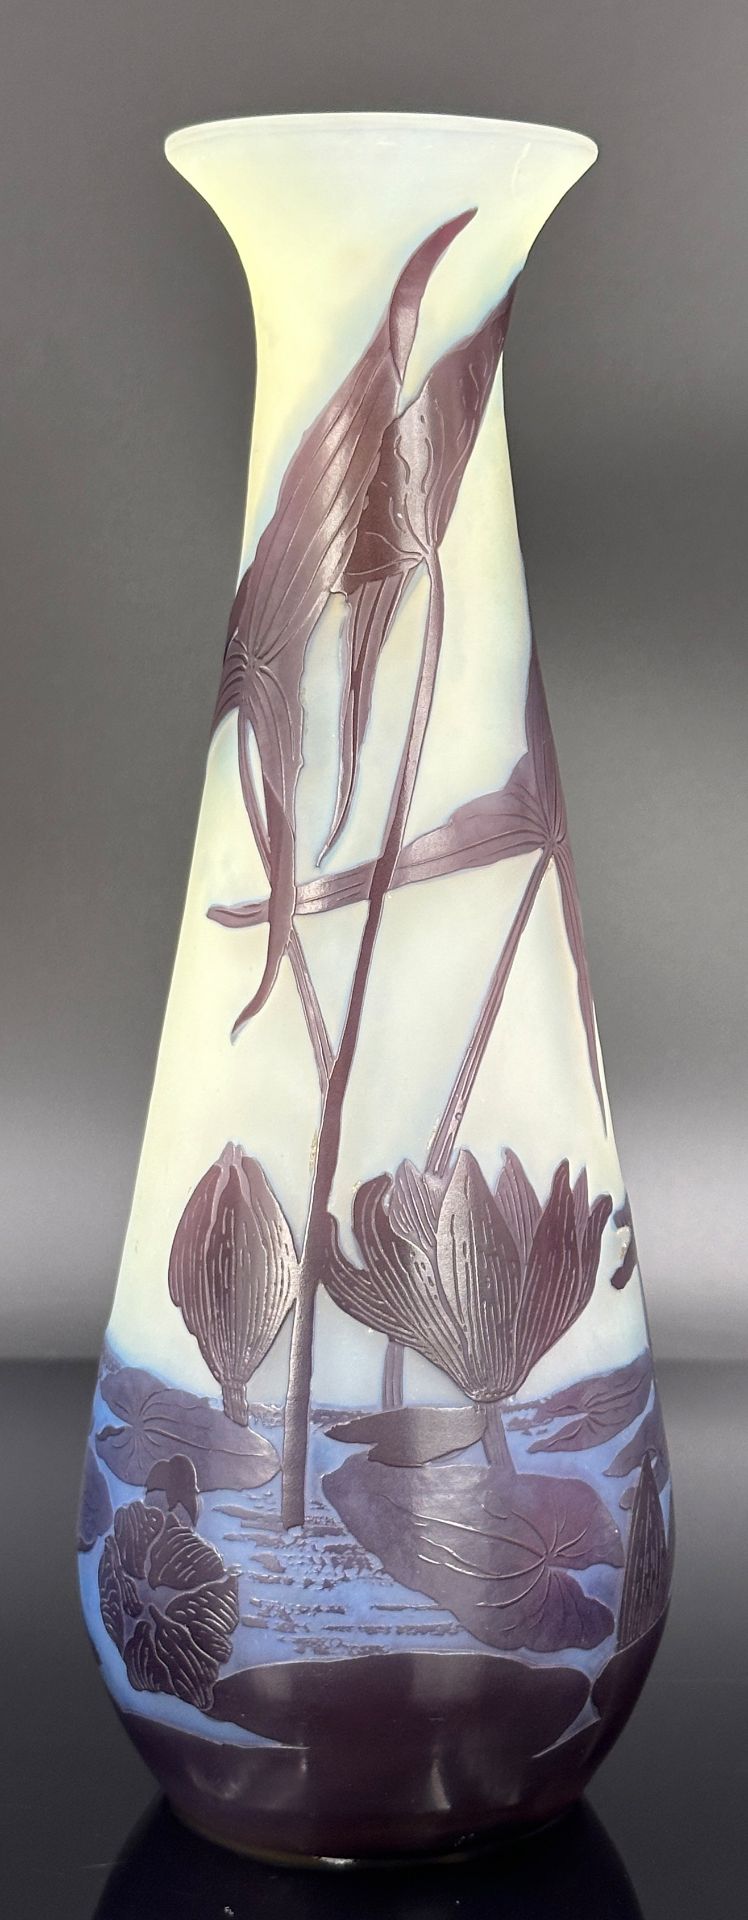 Club-shaped vase. Emile GALLÉ (1846 - 1904). Circa 1920.